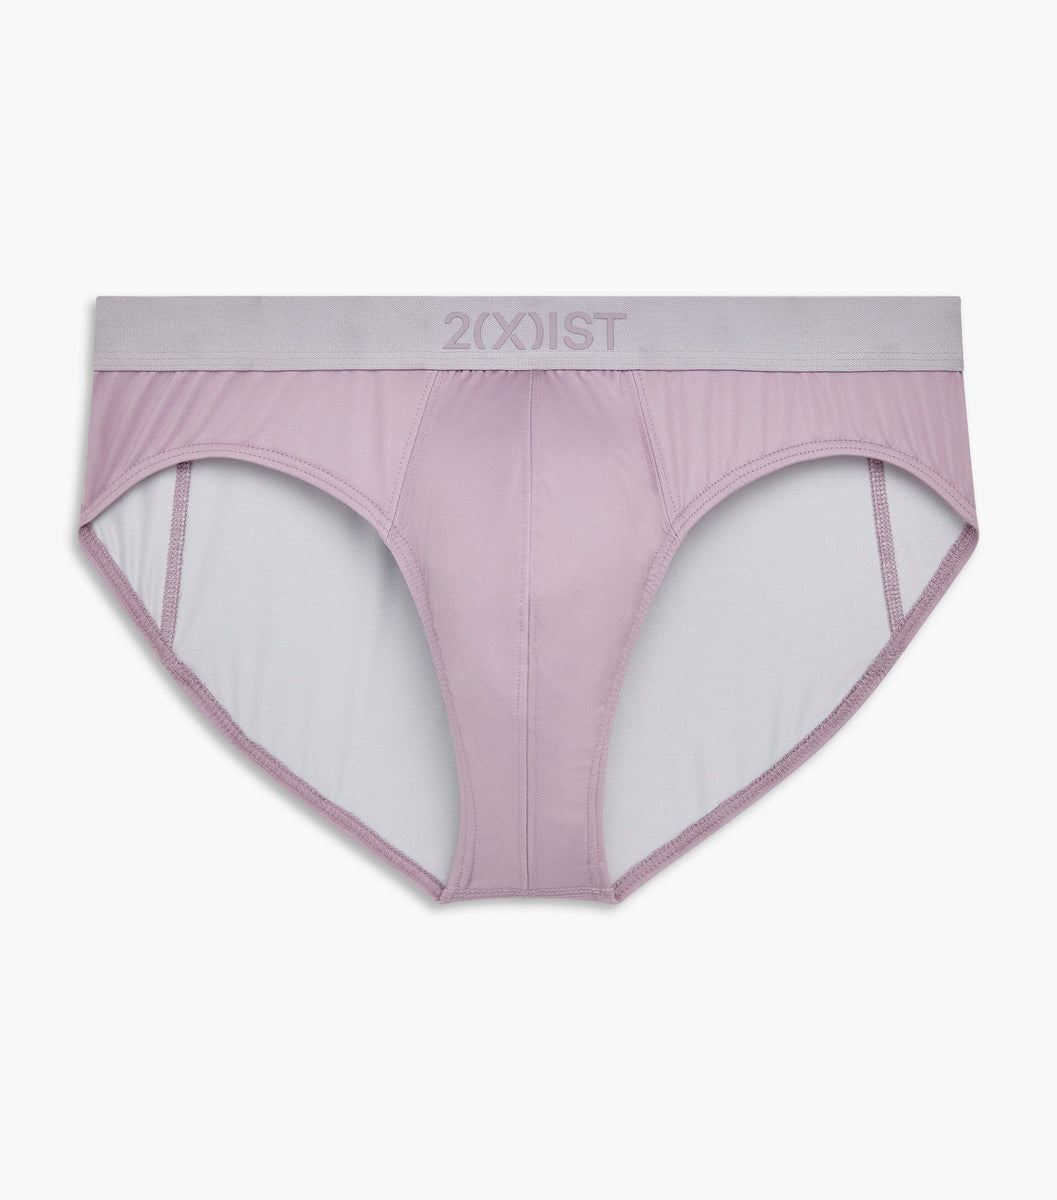 2(X)IST / 2XIST Performance Electro Micro Brief Men's Underwear - Small